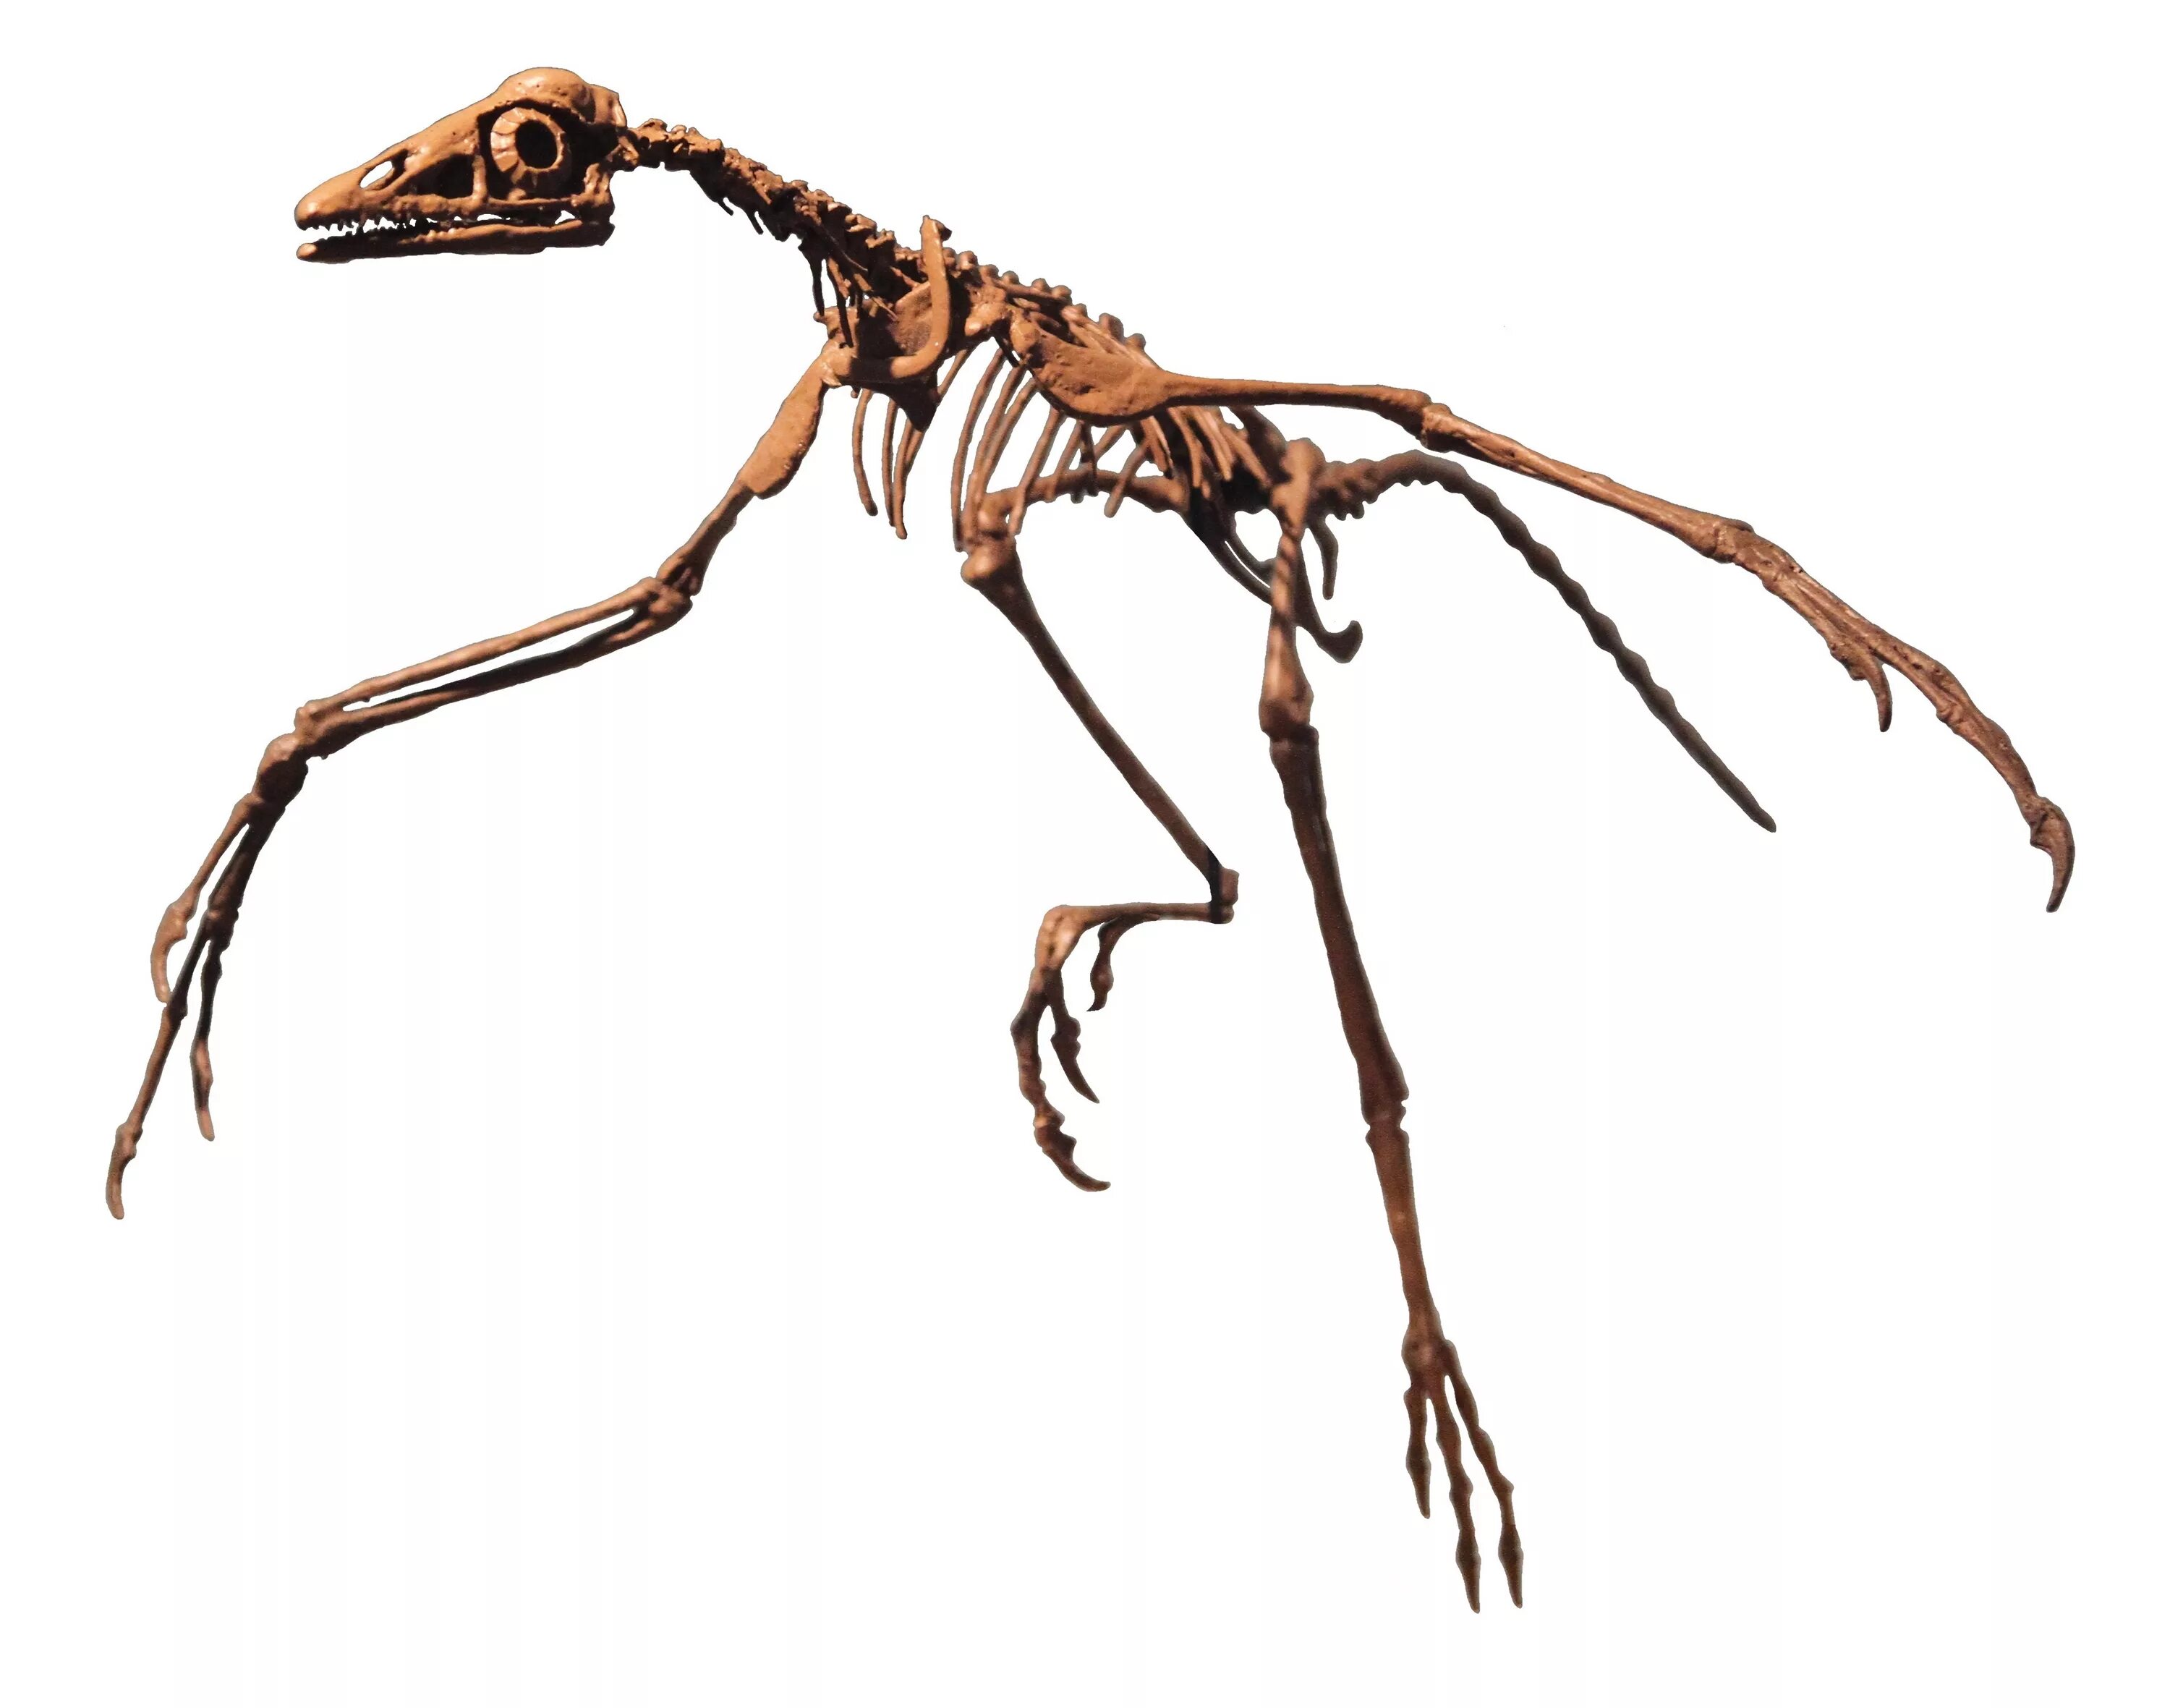 Archaeopteryx скелет. Археоптерикс скелет 1999. Археоптерикс реконструкция. Archaeopteryx кости. Скелет археоптерикса